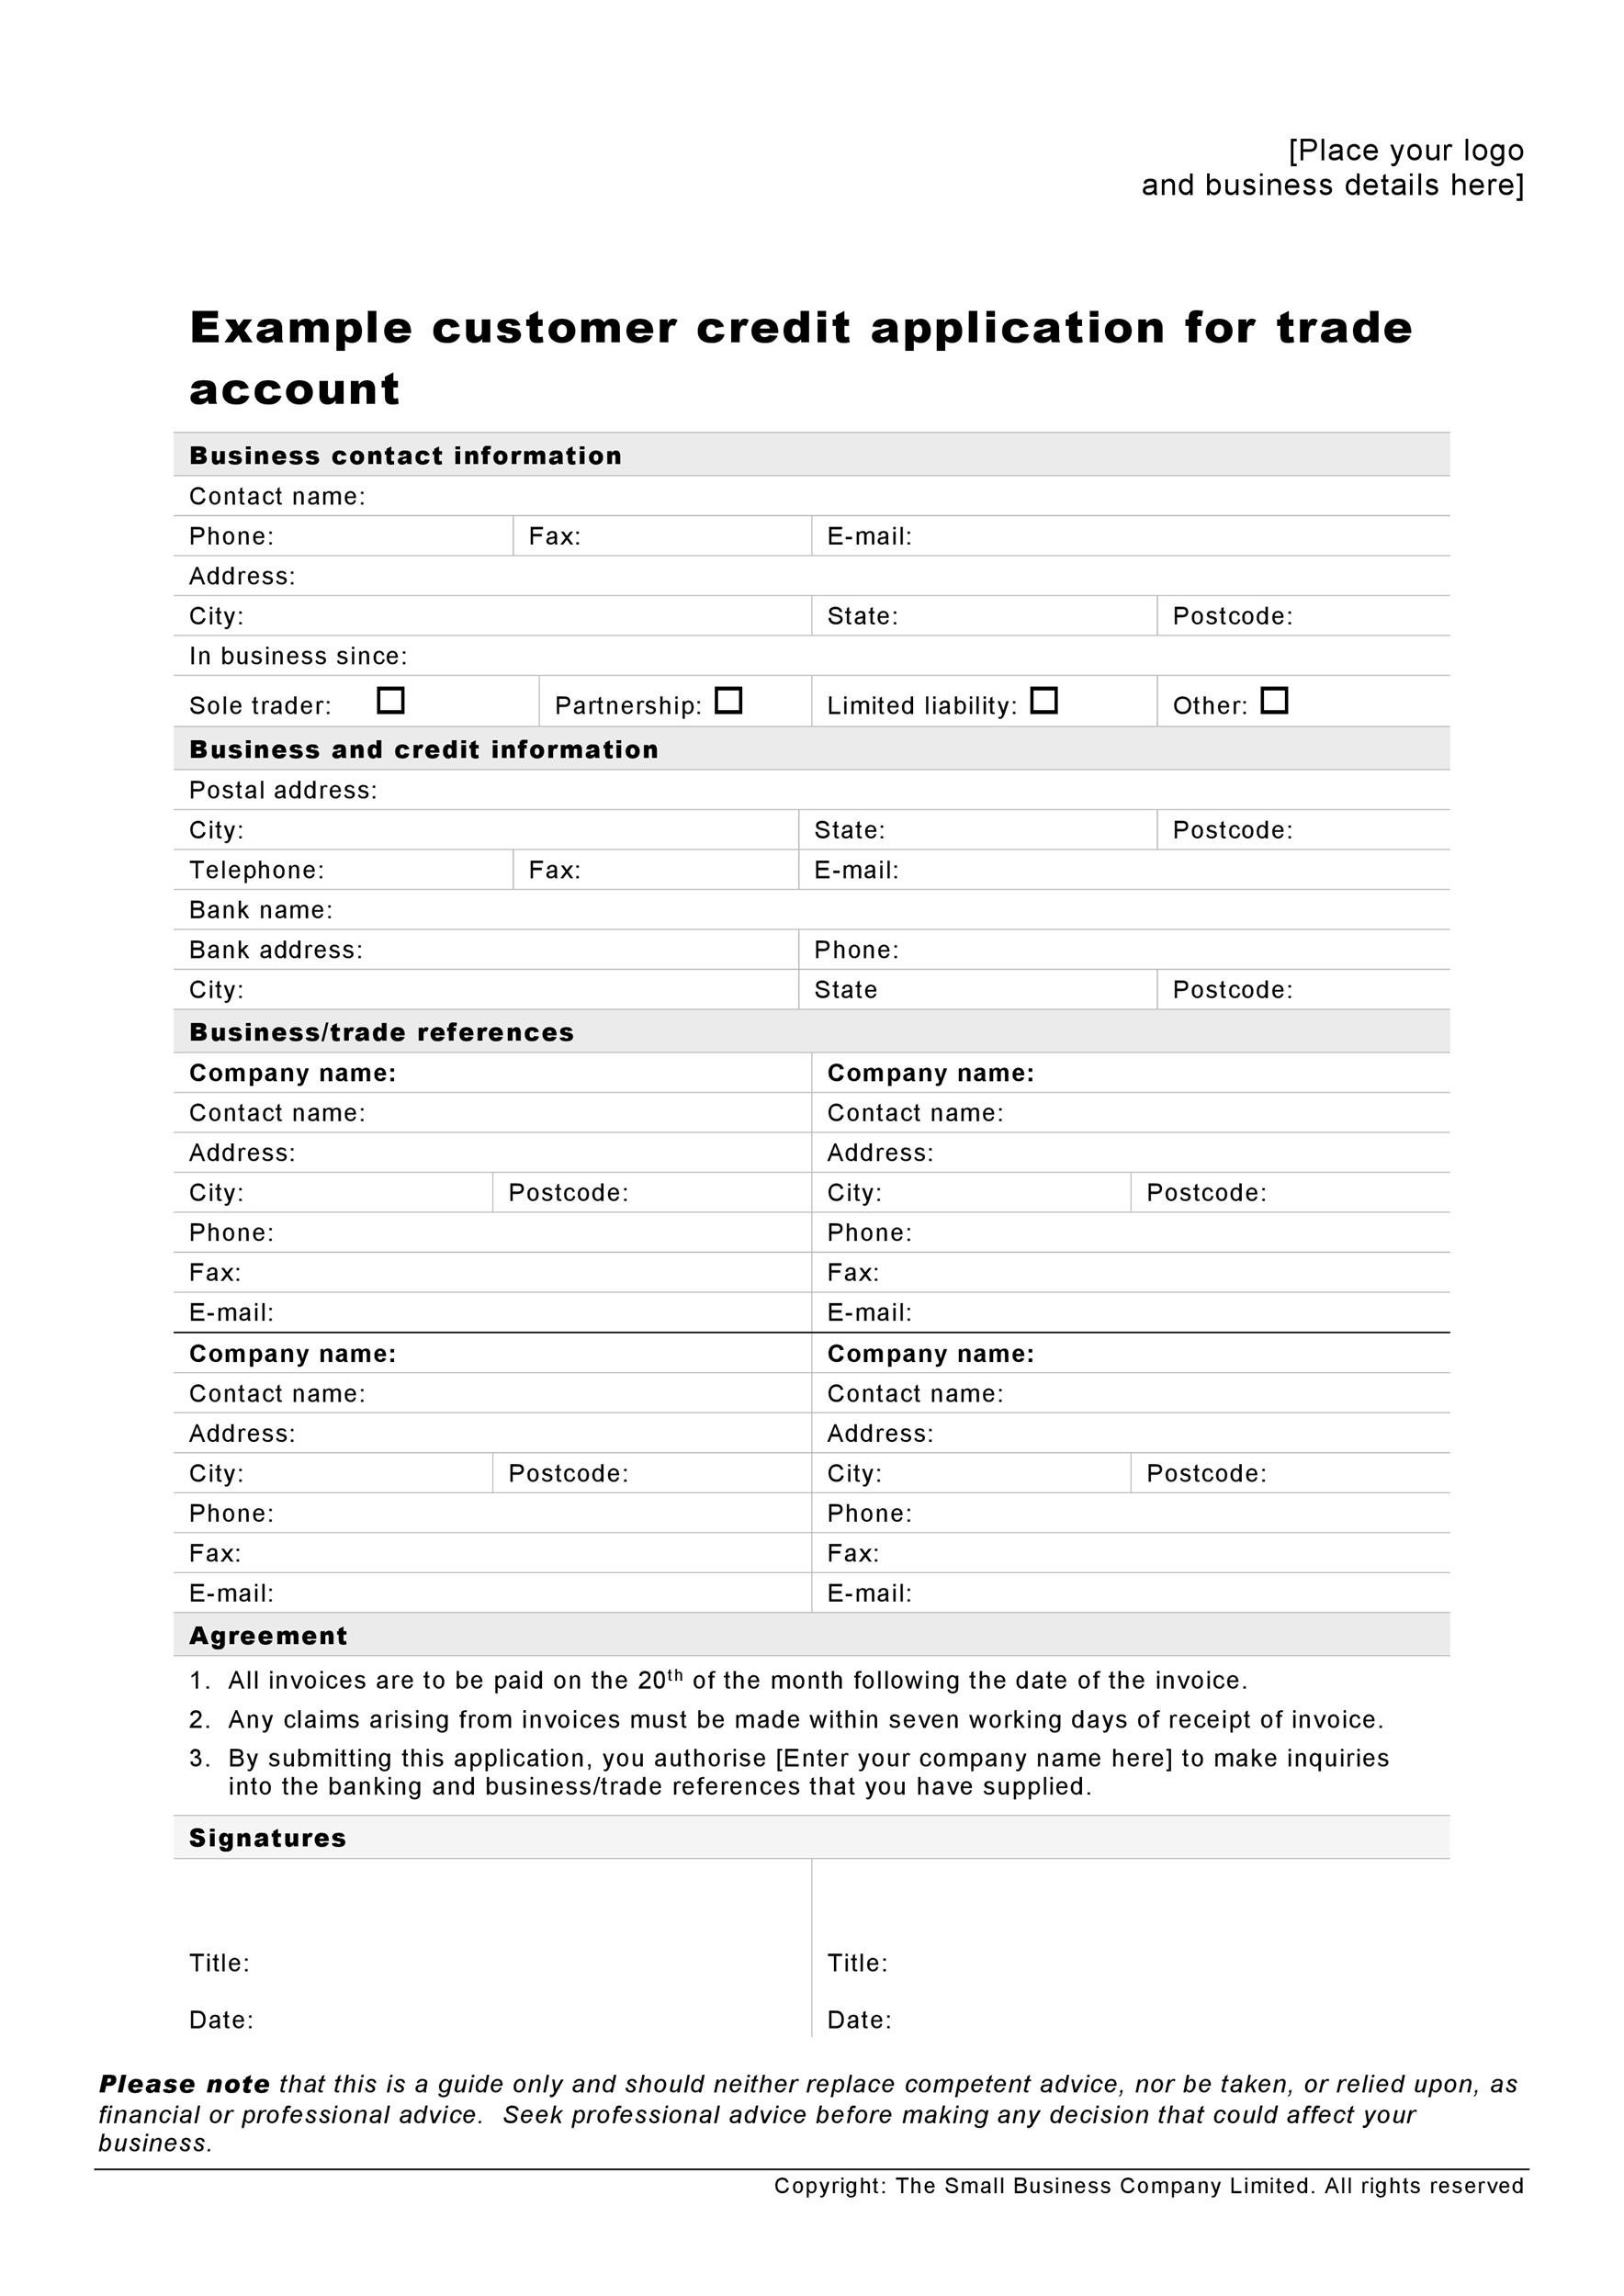 Credit Application Form Pdf from templatelab.com